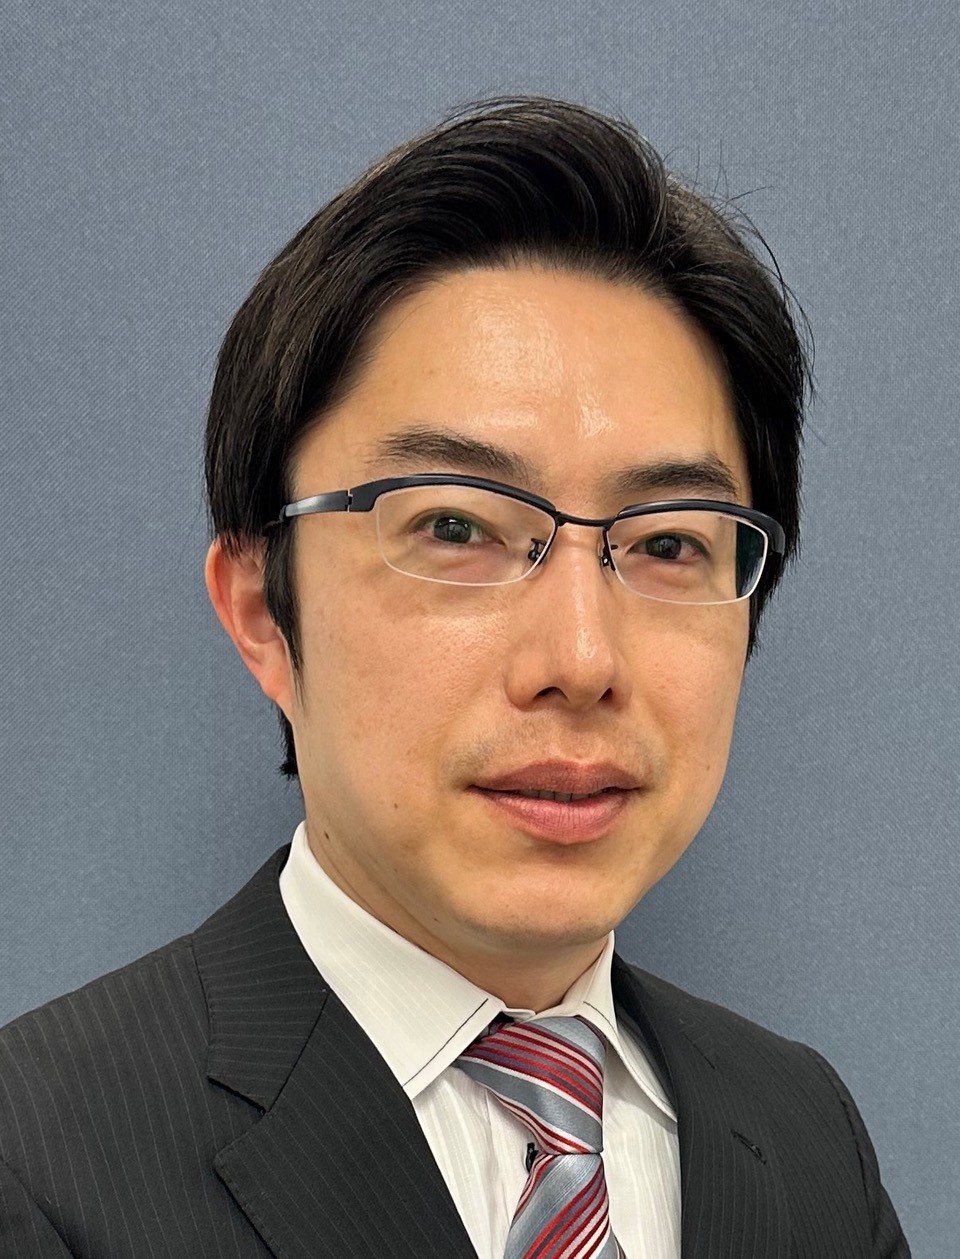 Medical Doctor at Osaka University Hospital and Associate Professor at Osaka University, is an active member of the ICPO Foundation